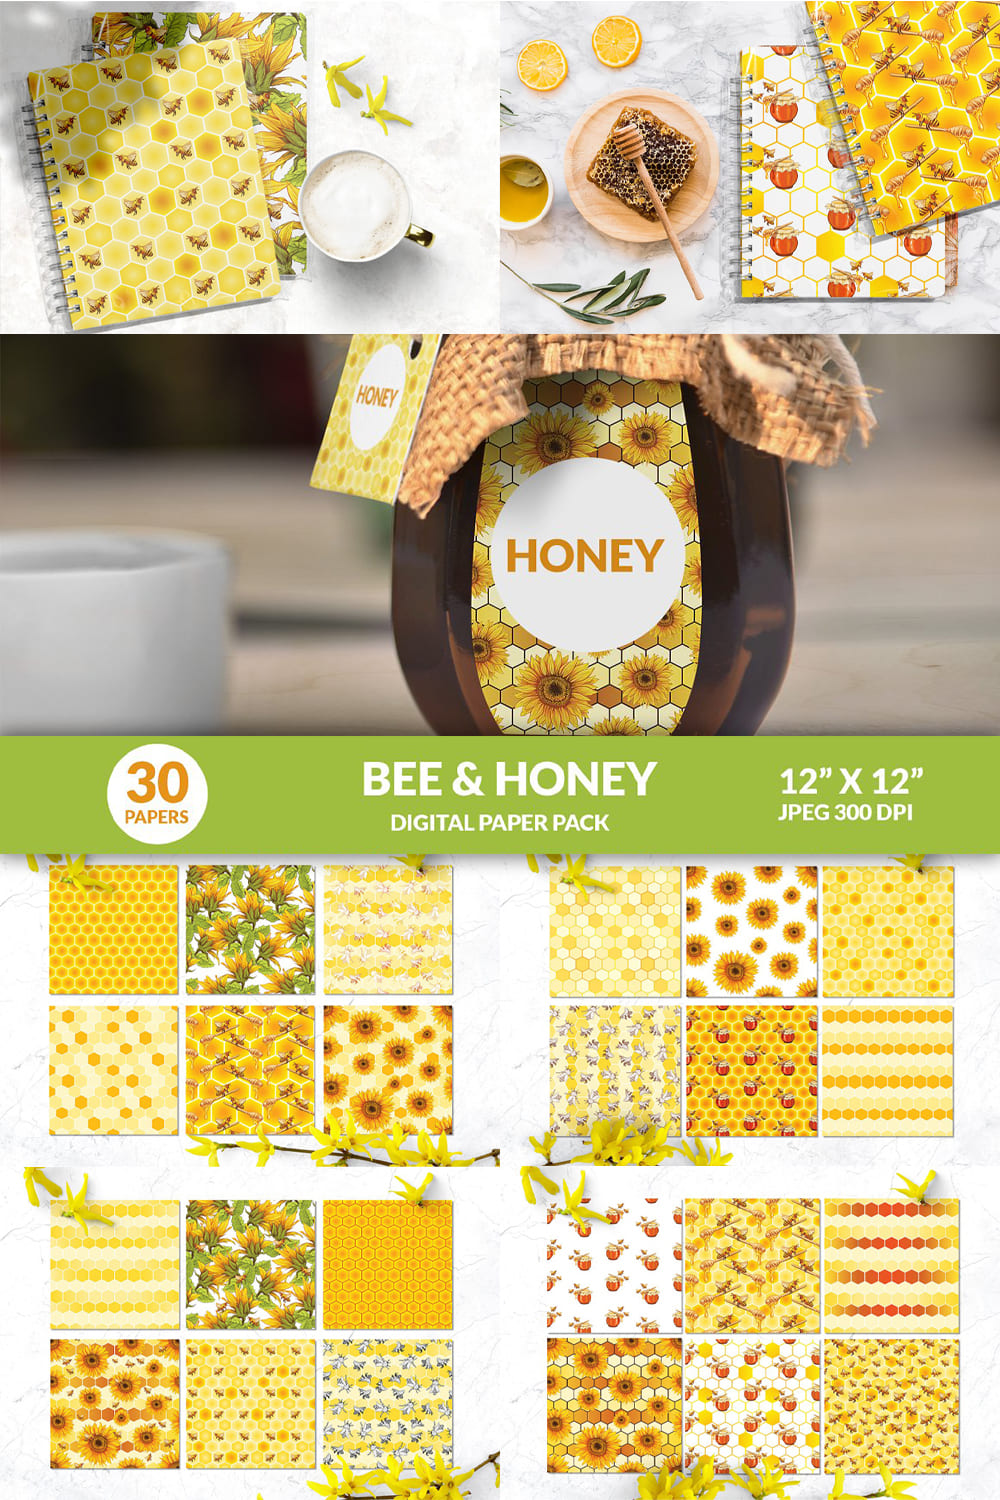 Bee honey digital paper pack - pinterest image preview.